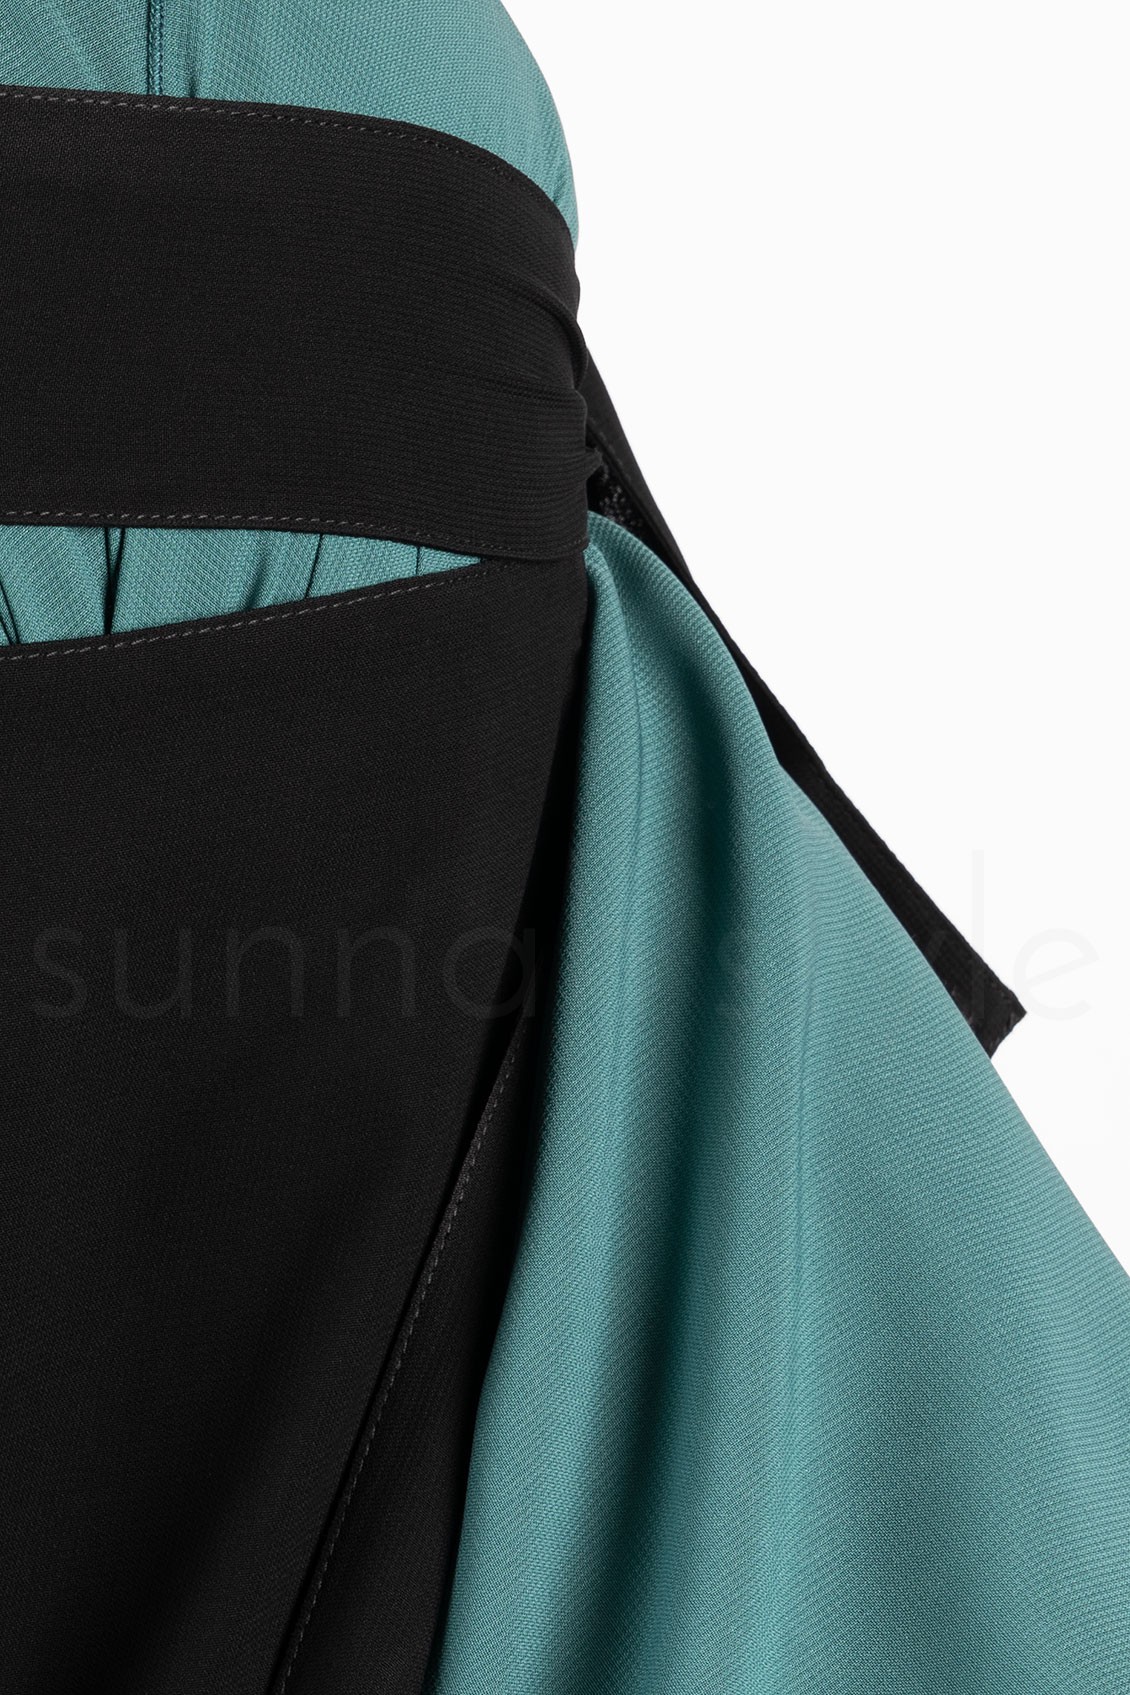 Sunnah Style Long Pull-Down One Layer Elastic Niqab Black